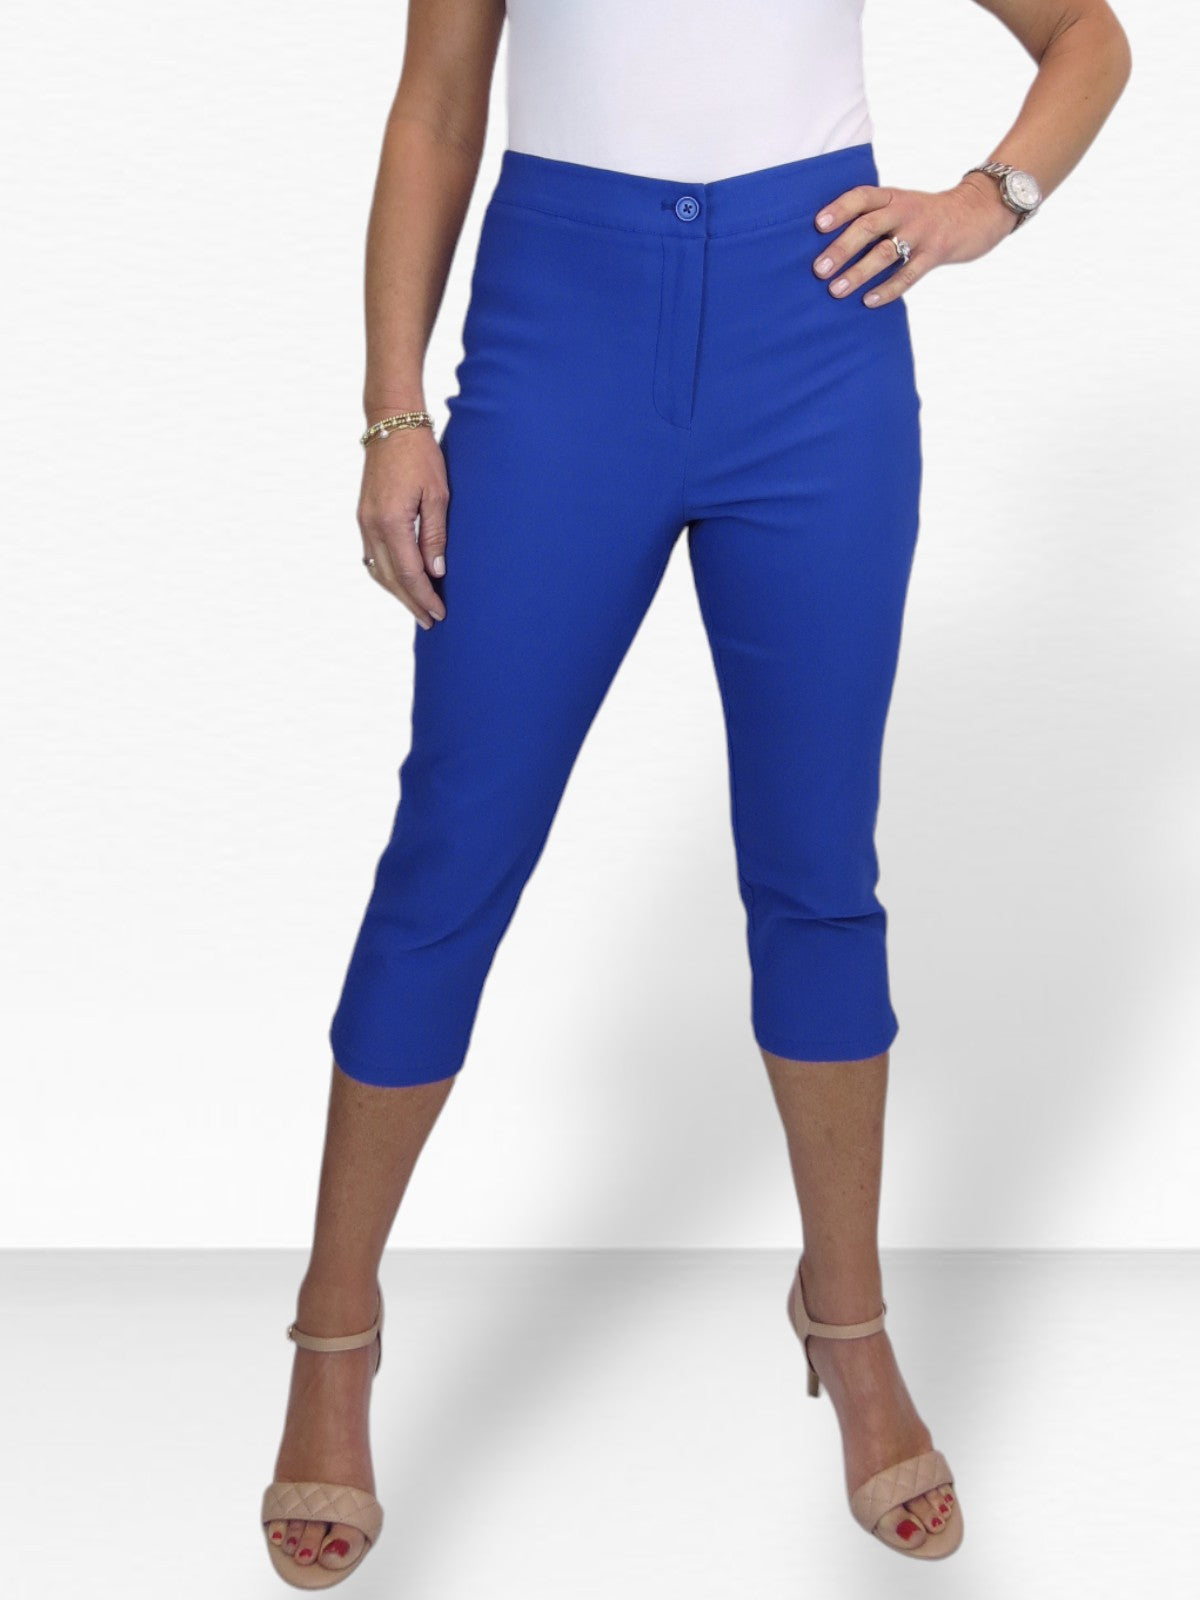 Women's Cropped 3/4 Length Capri Trousers Royal Blue